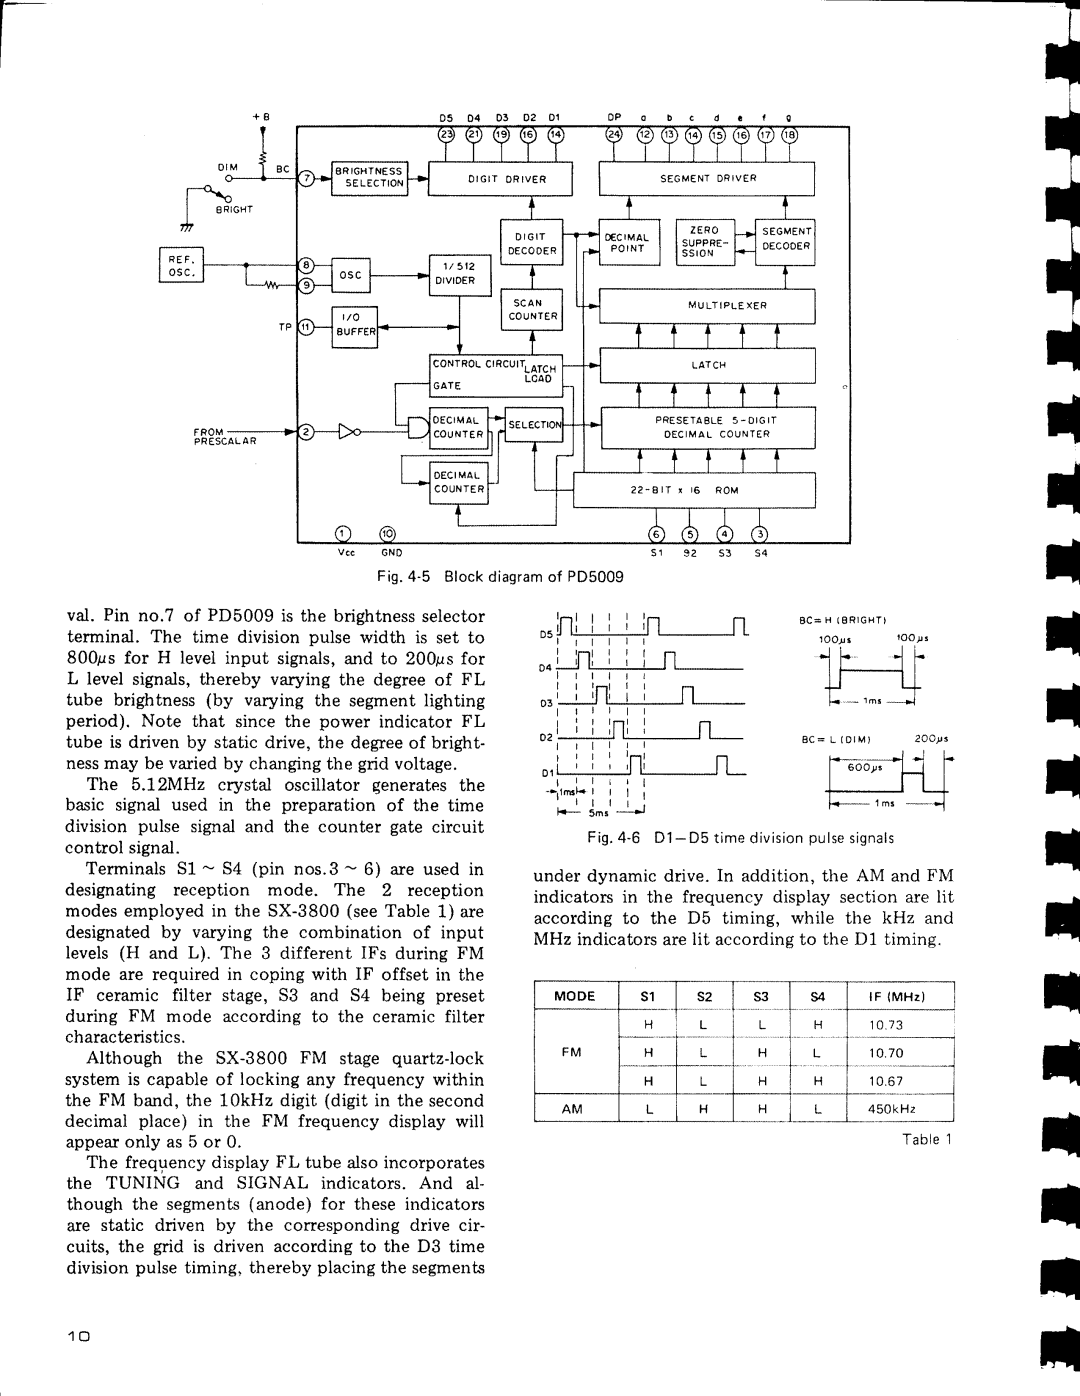 Pioneer SX-3800 manual I I I, l * i * i i l l 